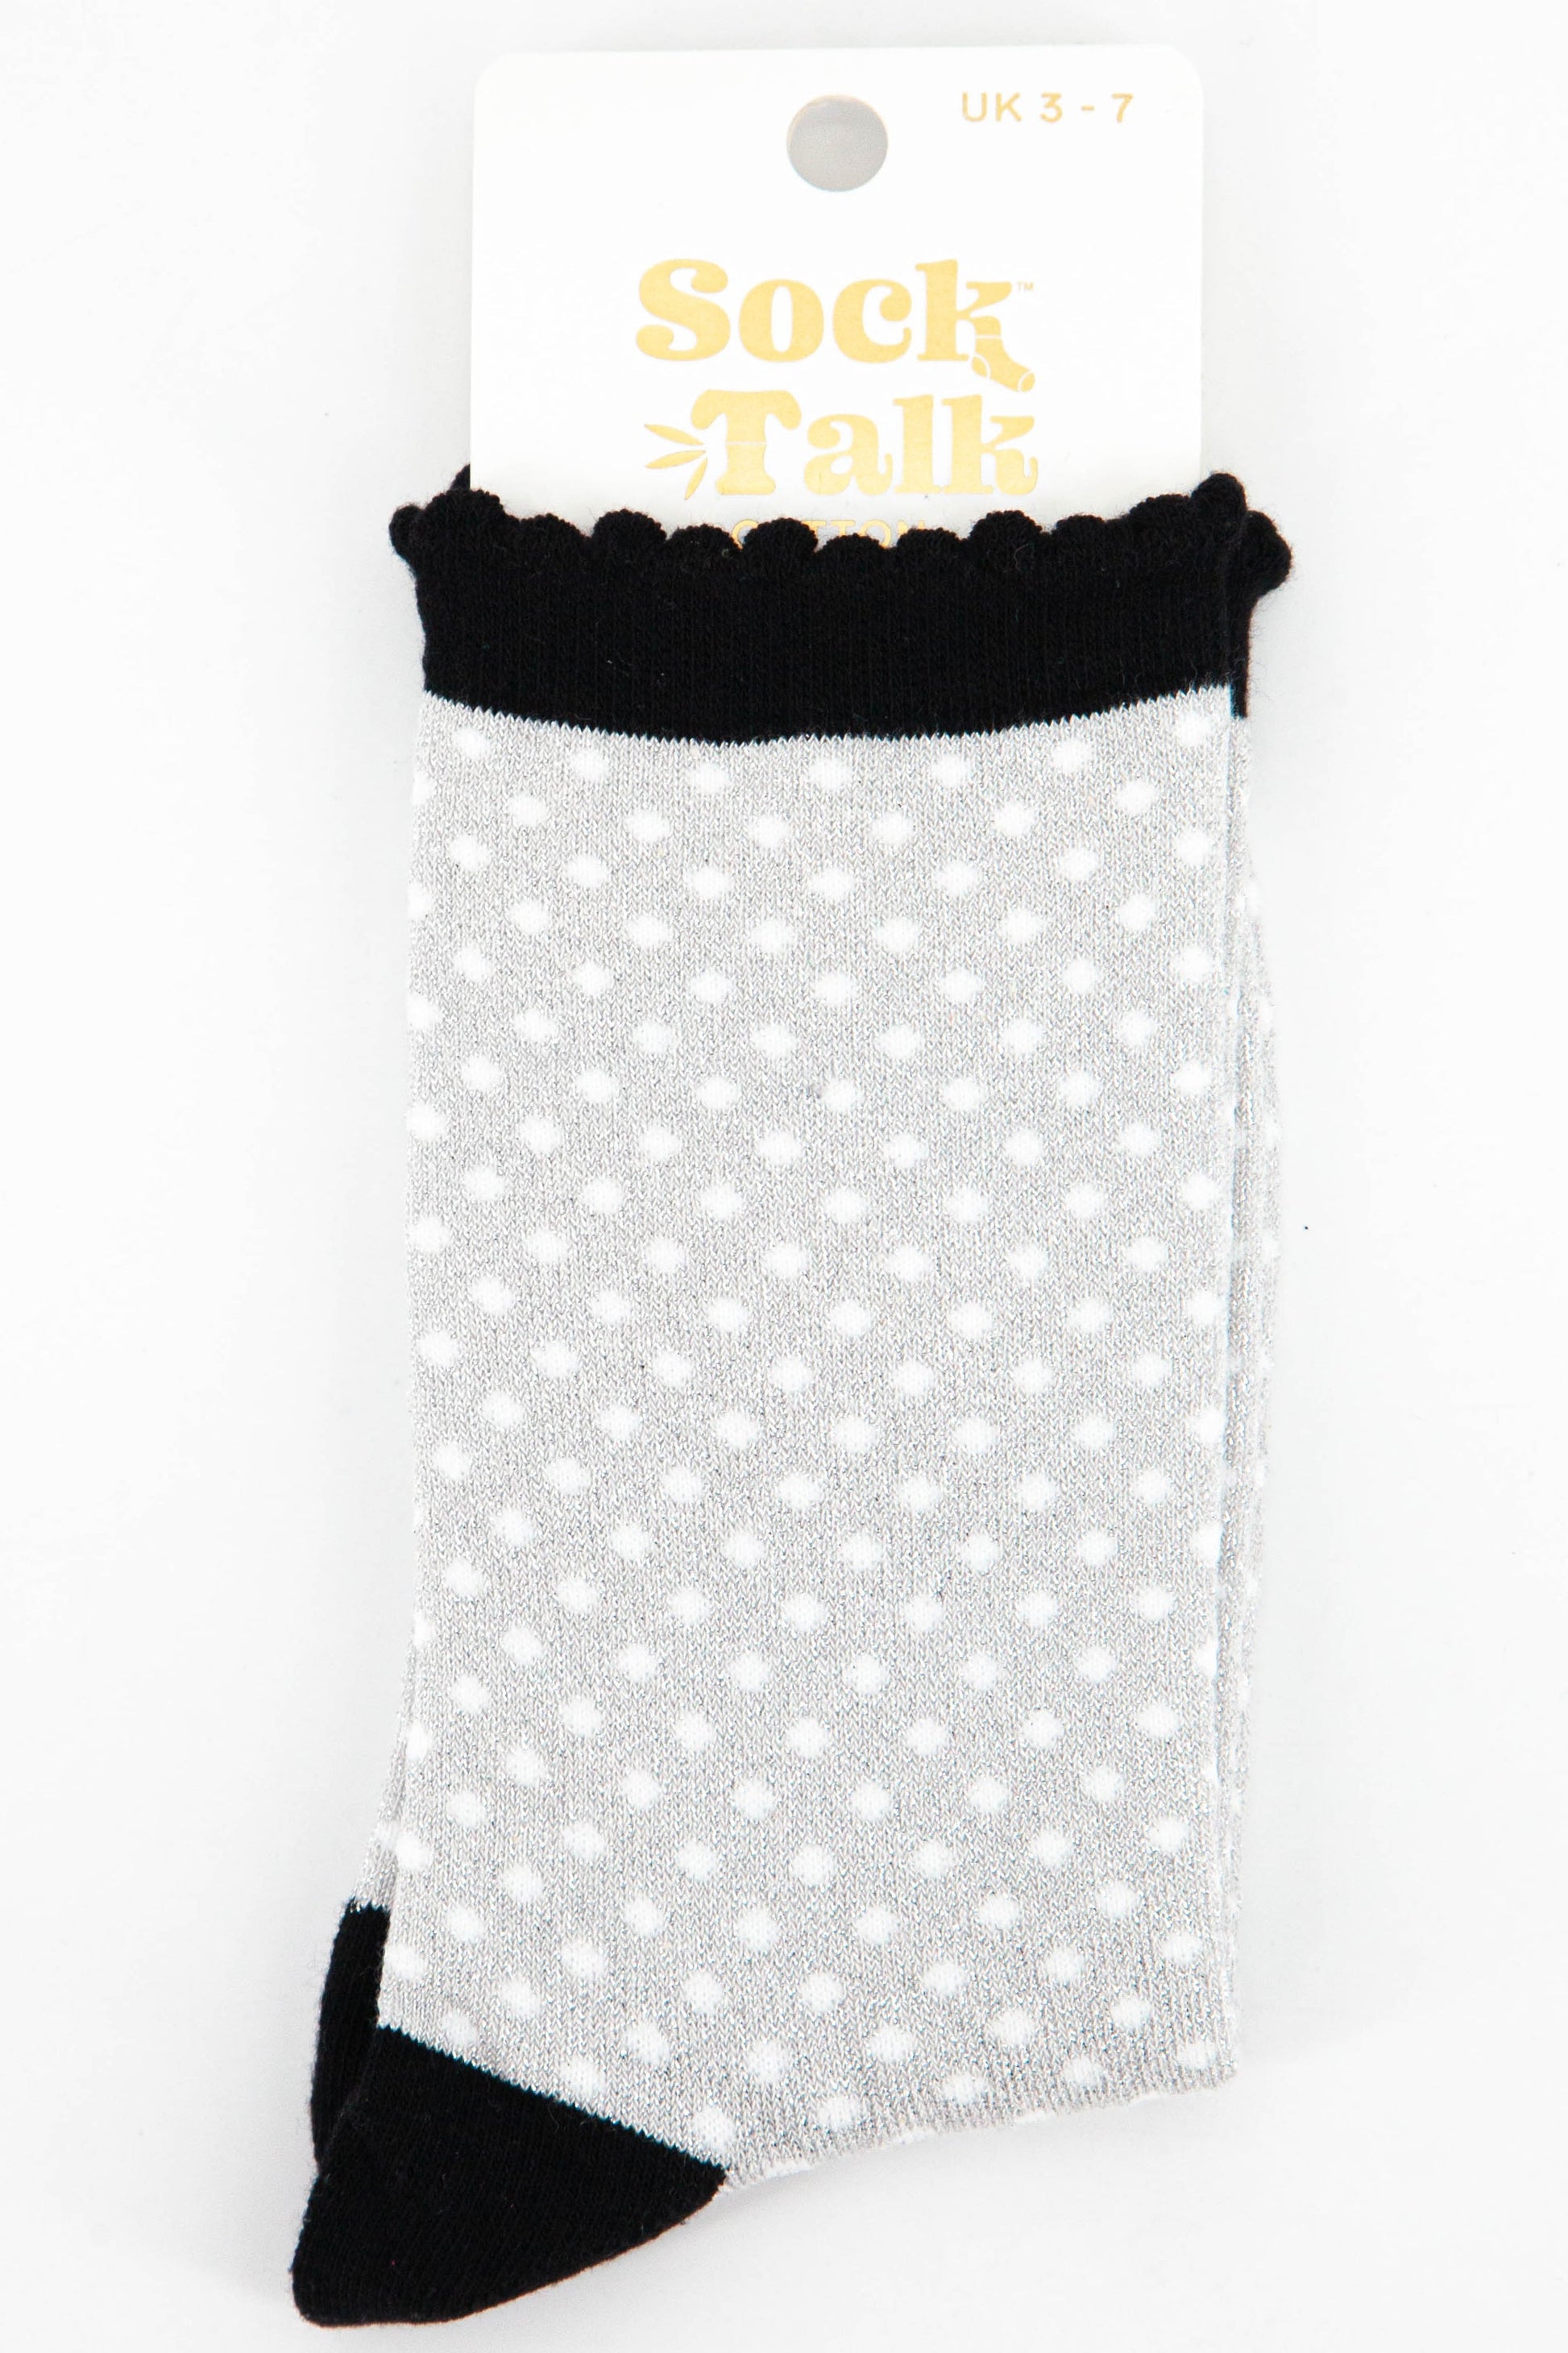 mini polka dot pattern glitter ankle socks in light grey and black uk size 3-7